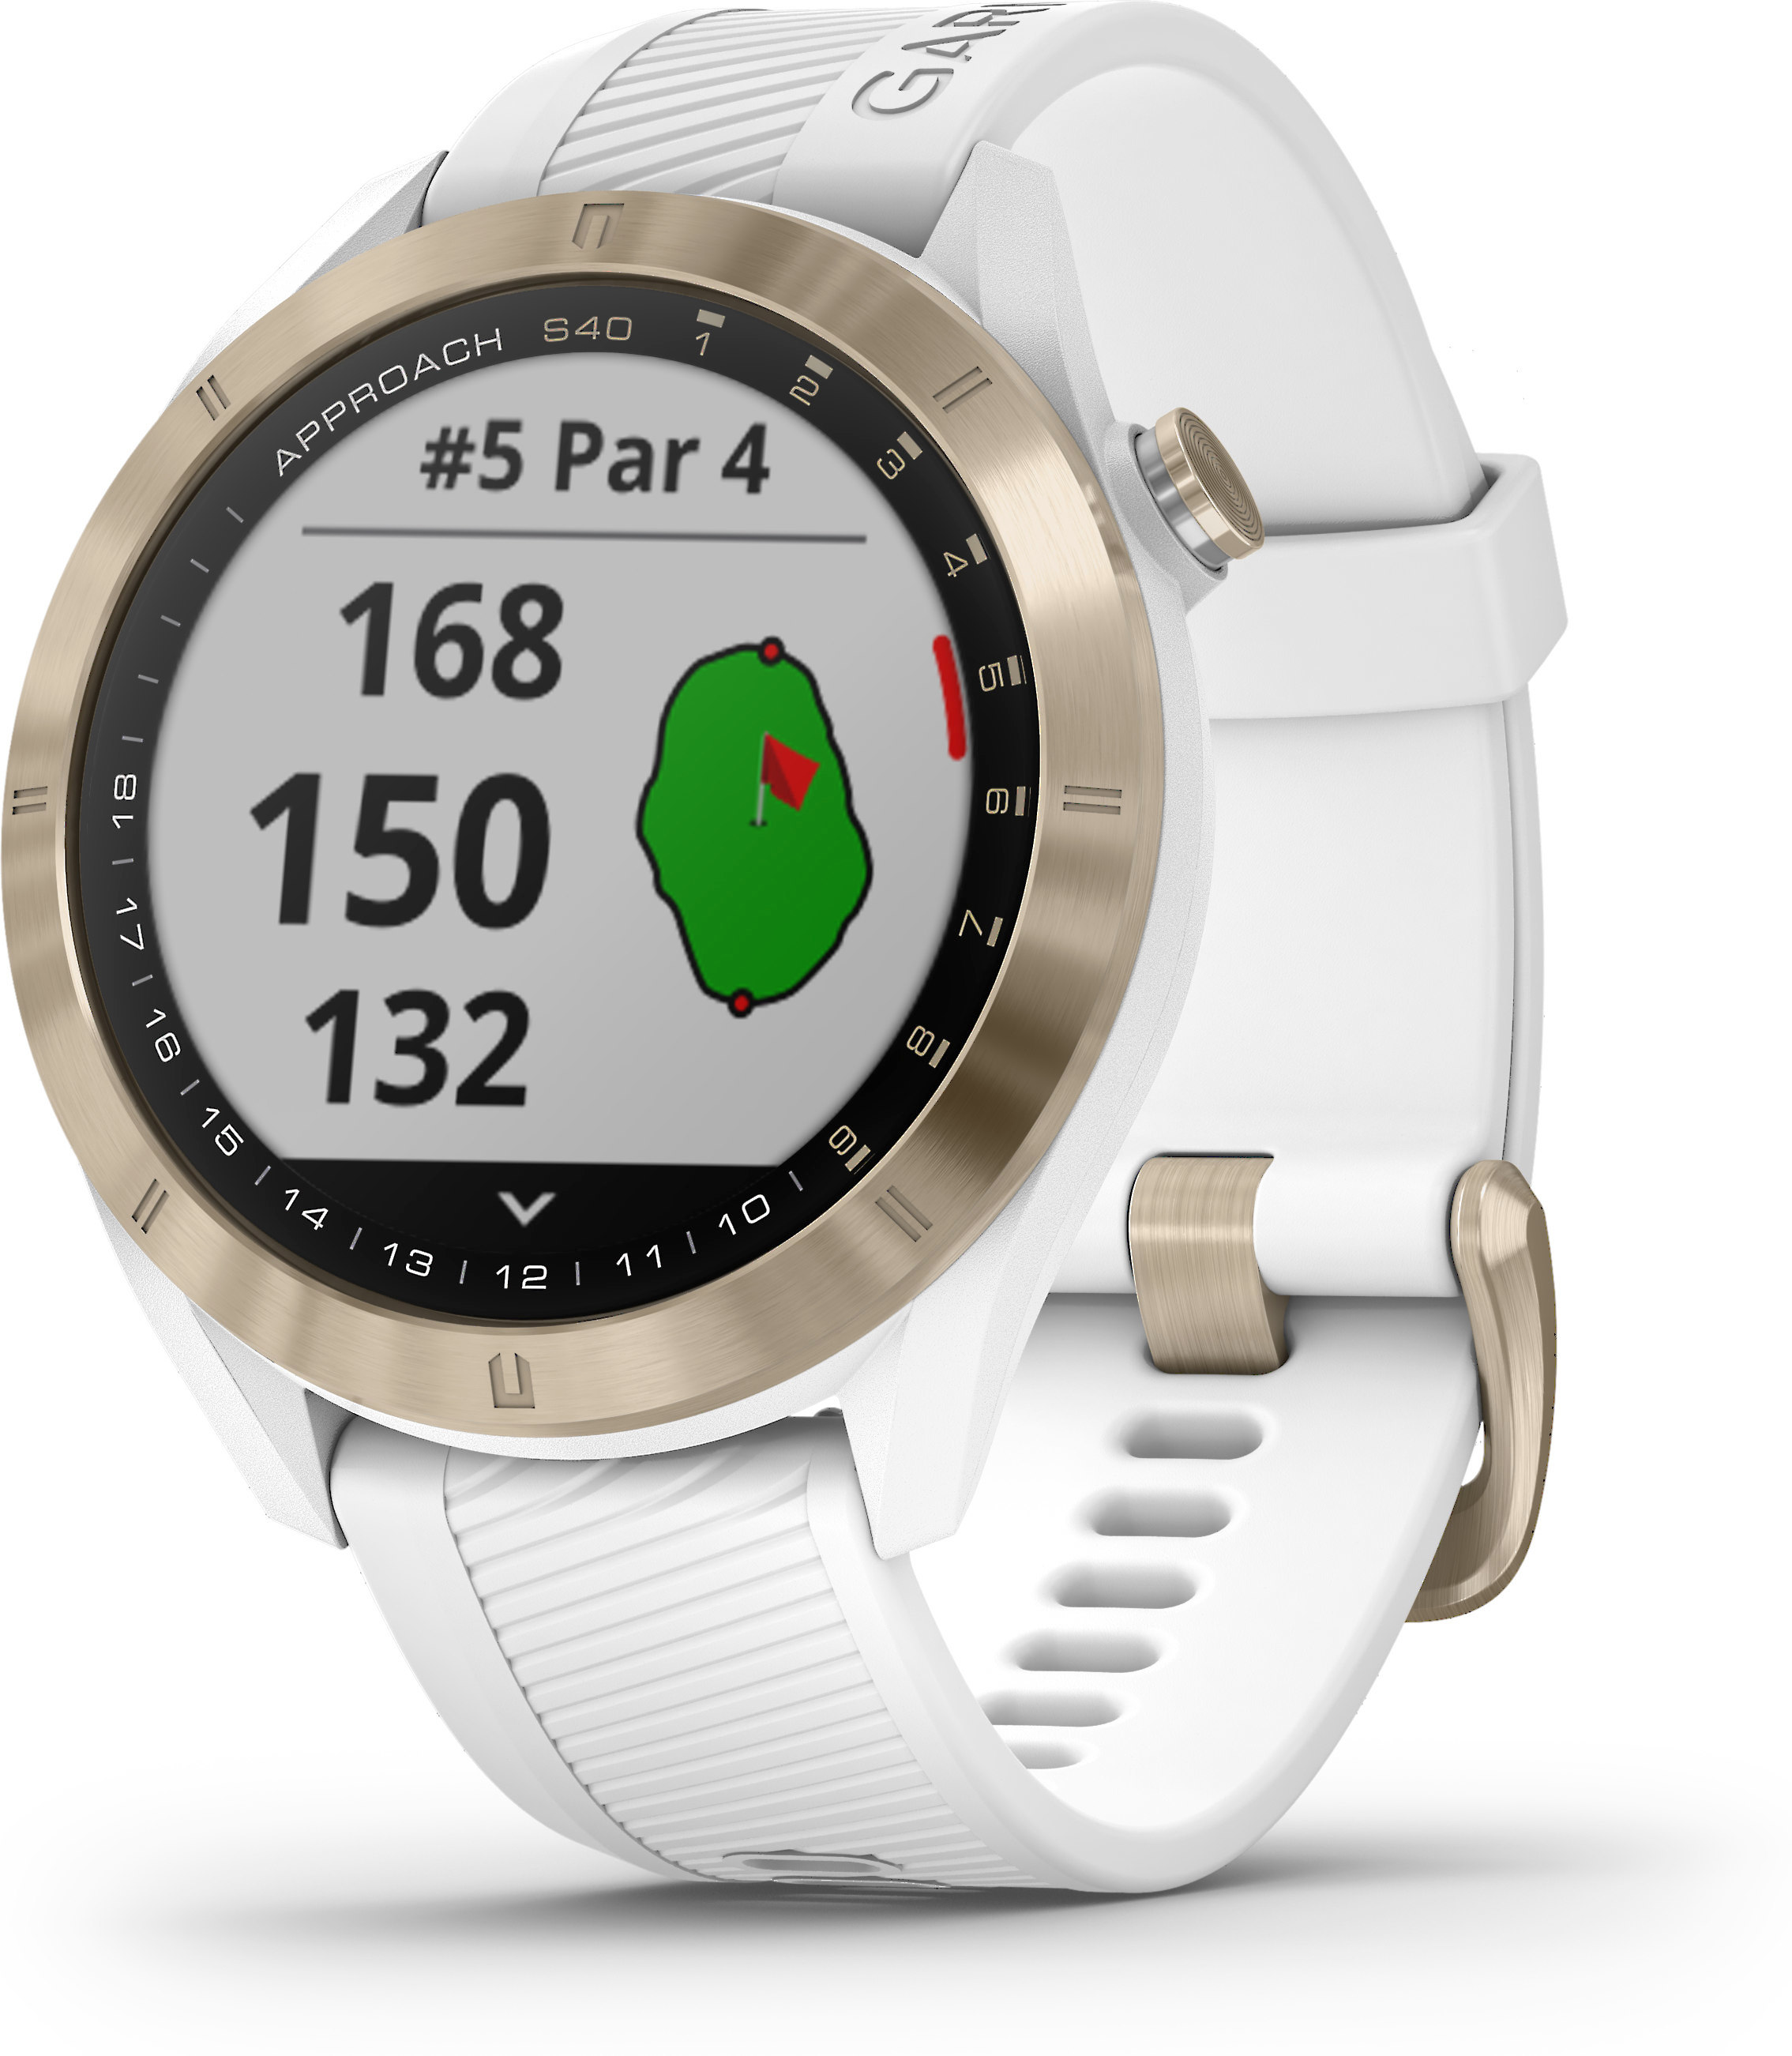 Garmin gps golf watch manual